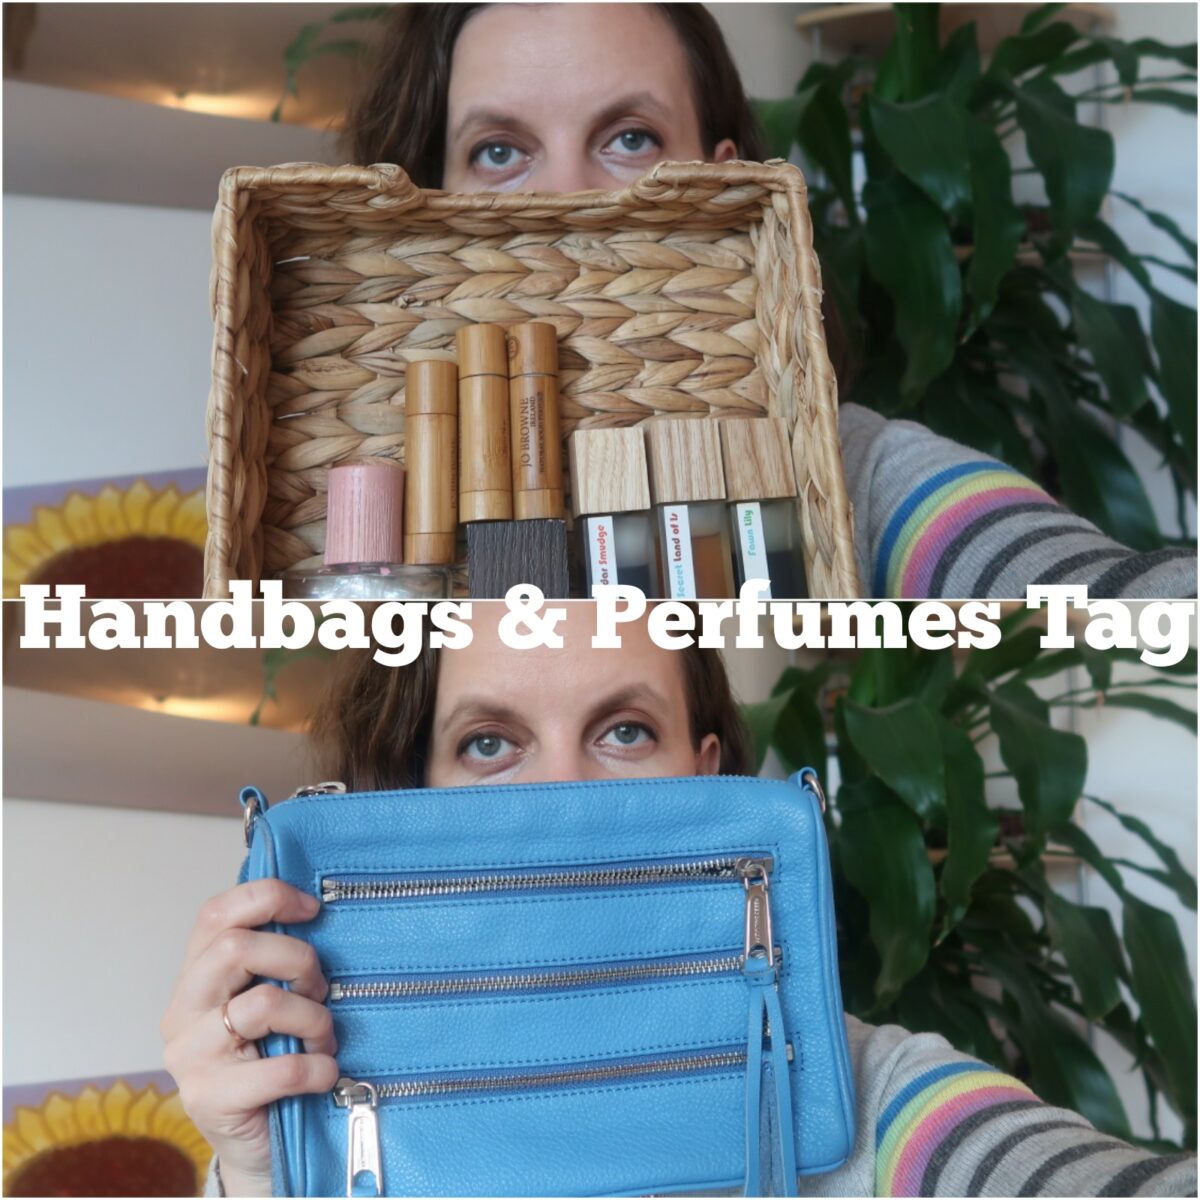 Handbags & perfumes tag